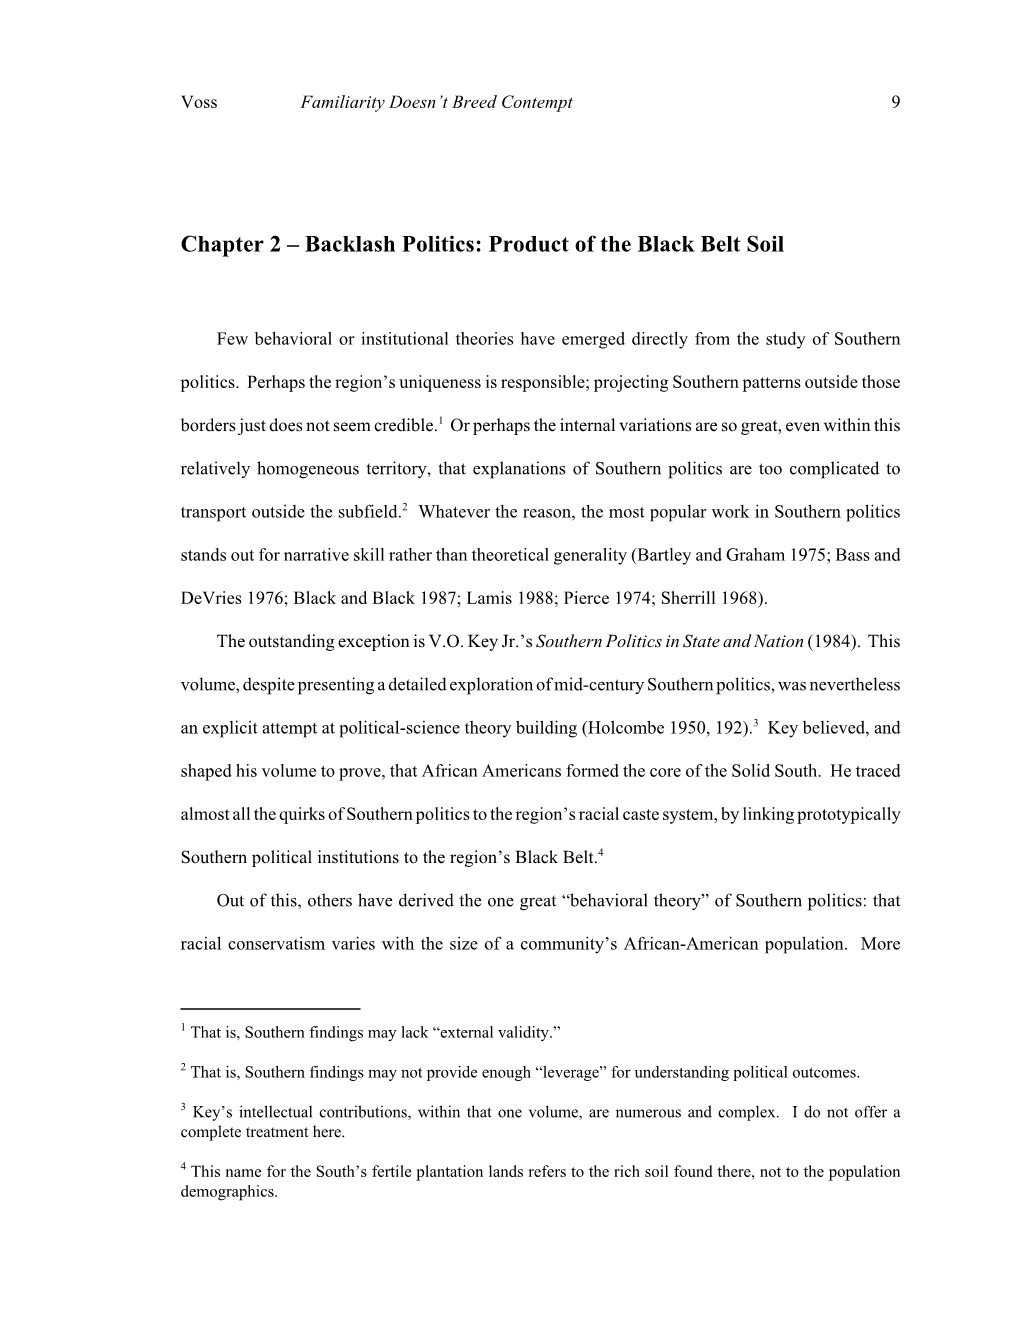 Chapter 2 – Backlash Politics: Product of the Black Belt Soil